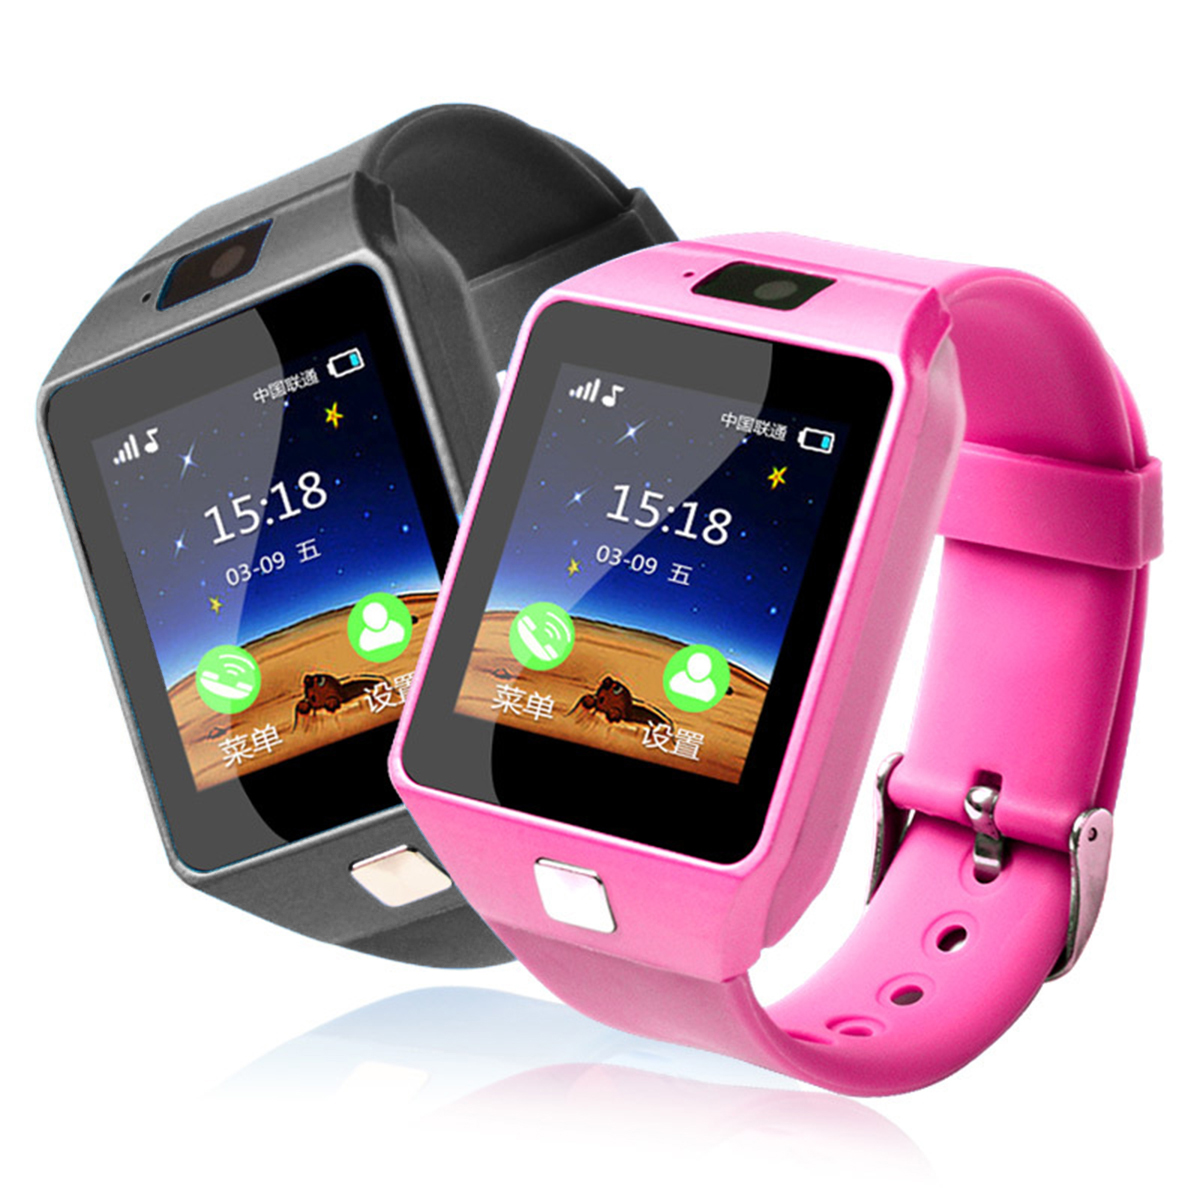 

Bakeey Q06 1.54inch 2G Bluetooth Call Anti-lost Safe Tracker Sleep Монитор Kids Smart Watch Phone